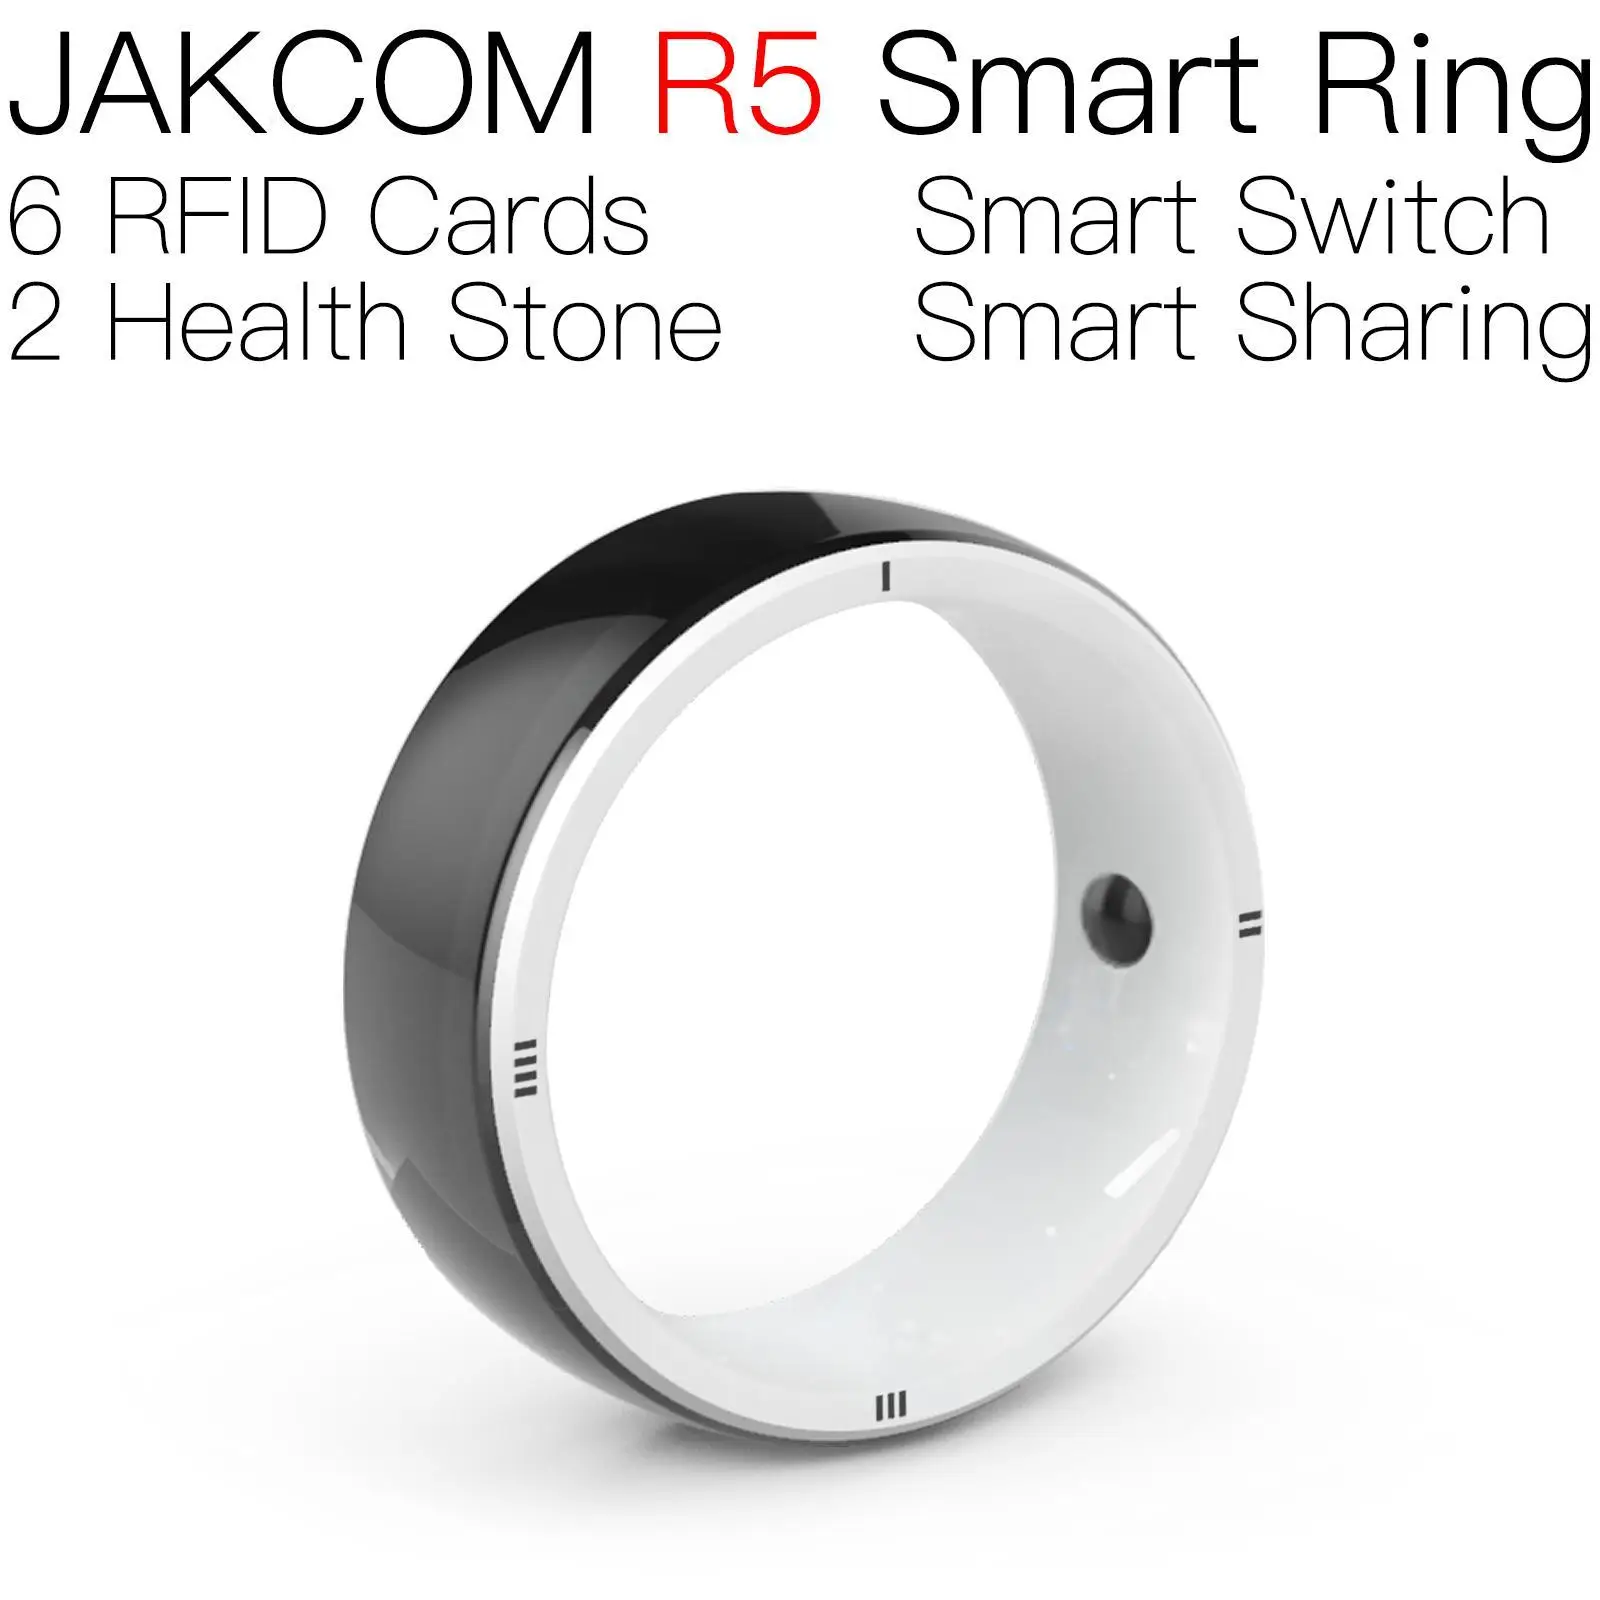 

JAKCOM R5 Smart Ring Super value than concrete rfid tag 10 fp1 uhf uid rewritable ring nfc em4100 writable memory lable smart